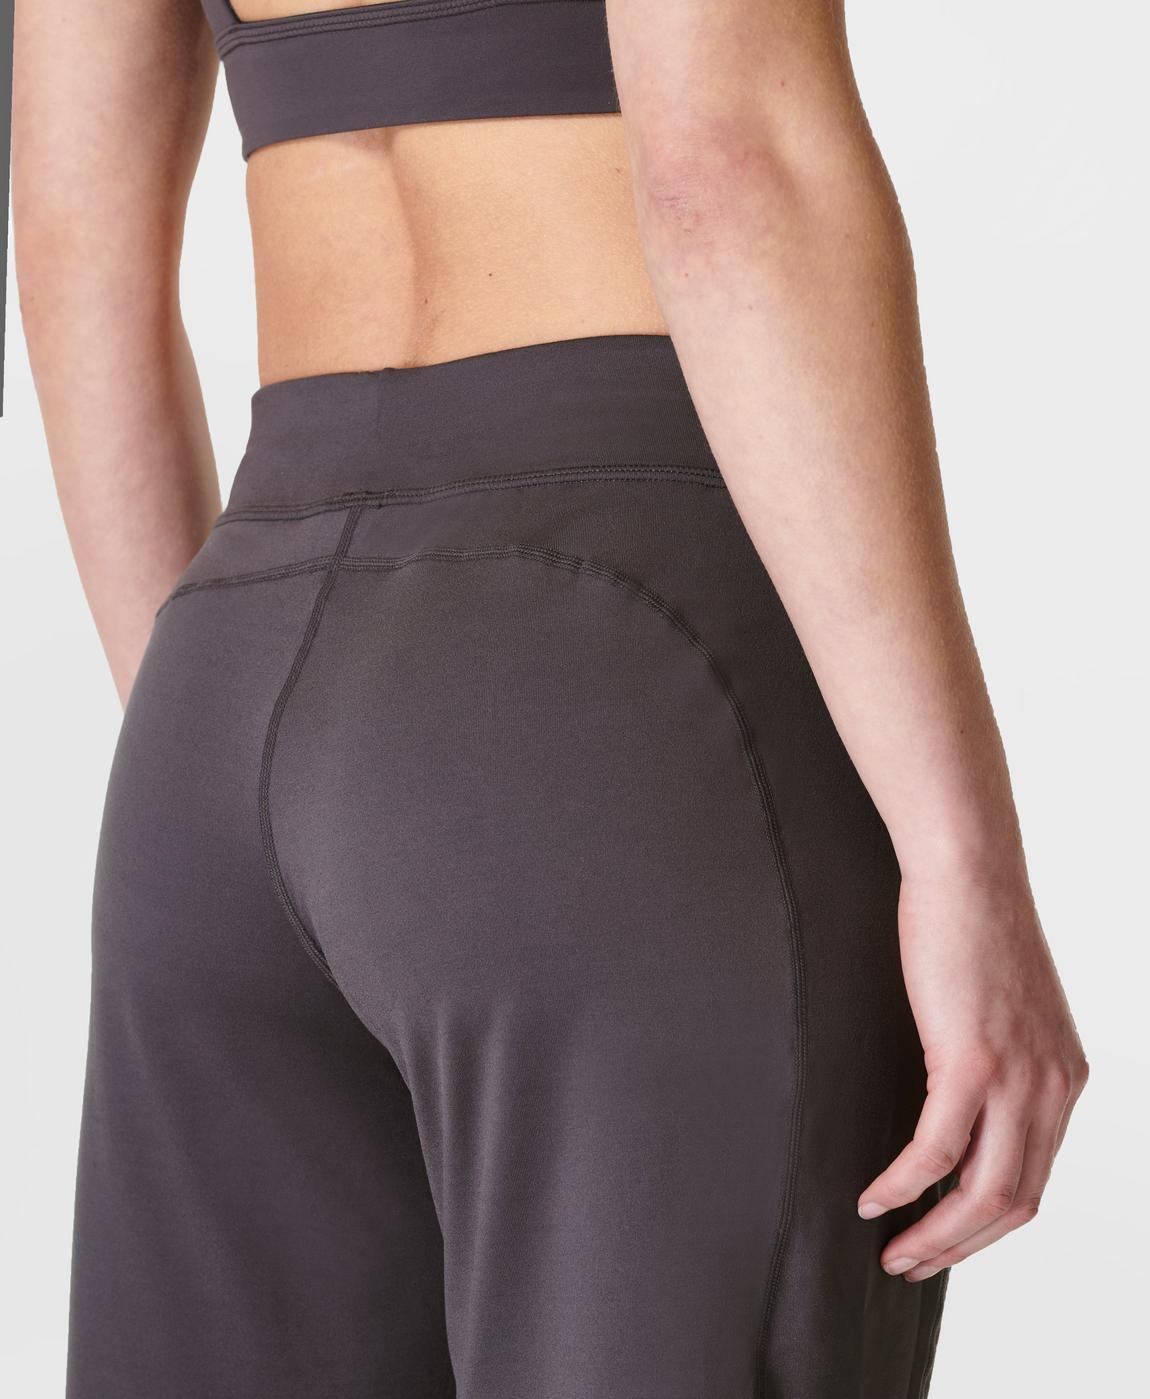 Gary Yoga Pants - Urban Grey, Women's Trousers & Yoga Pants